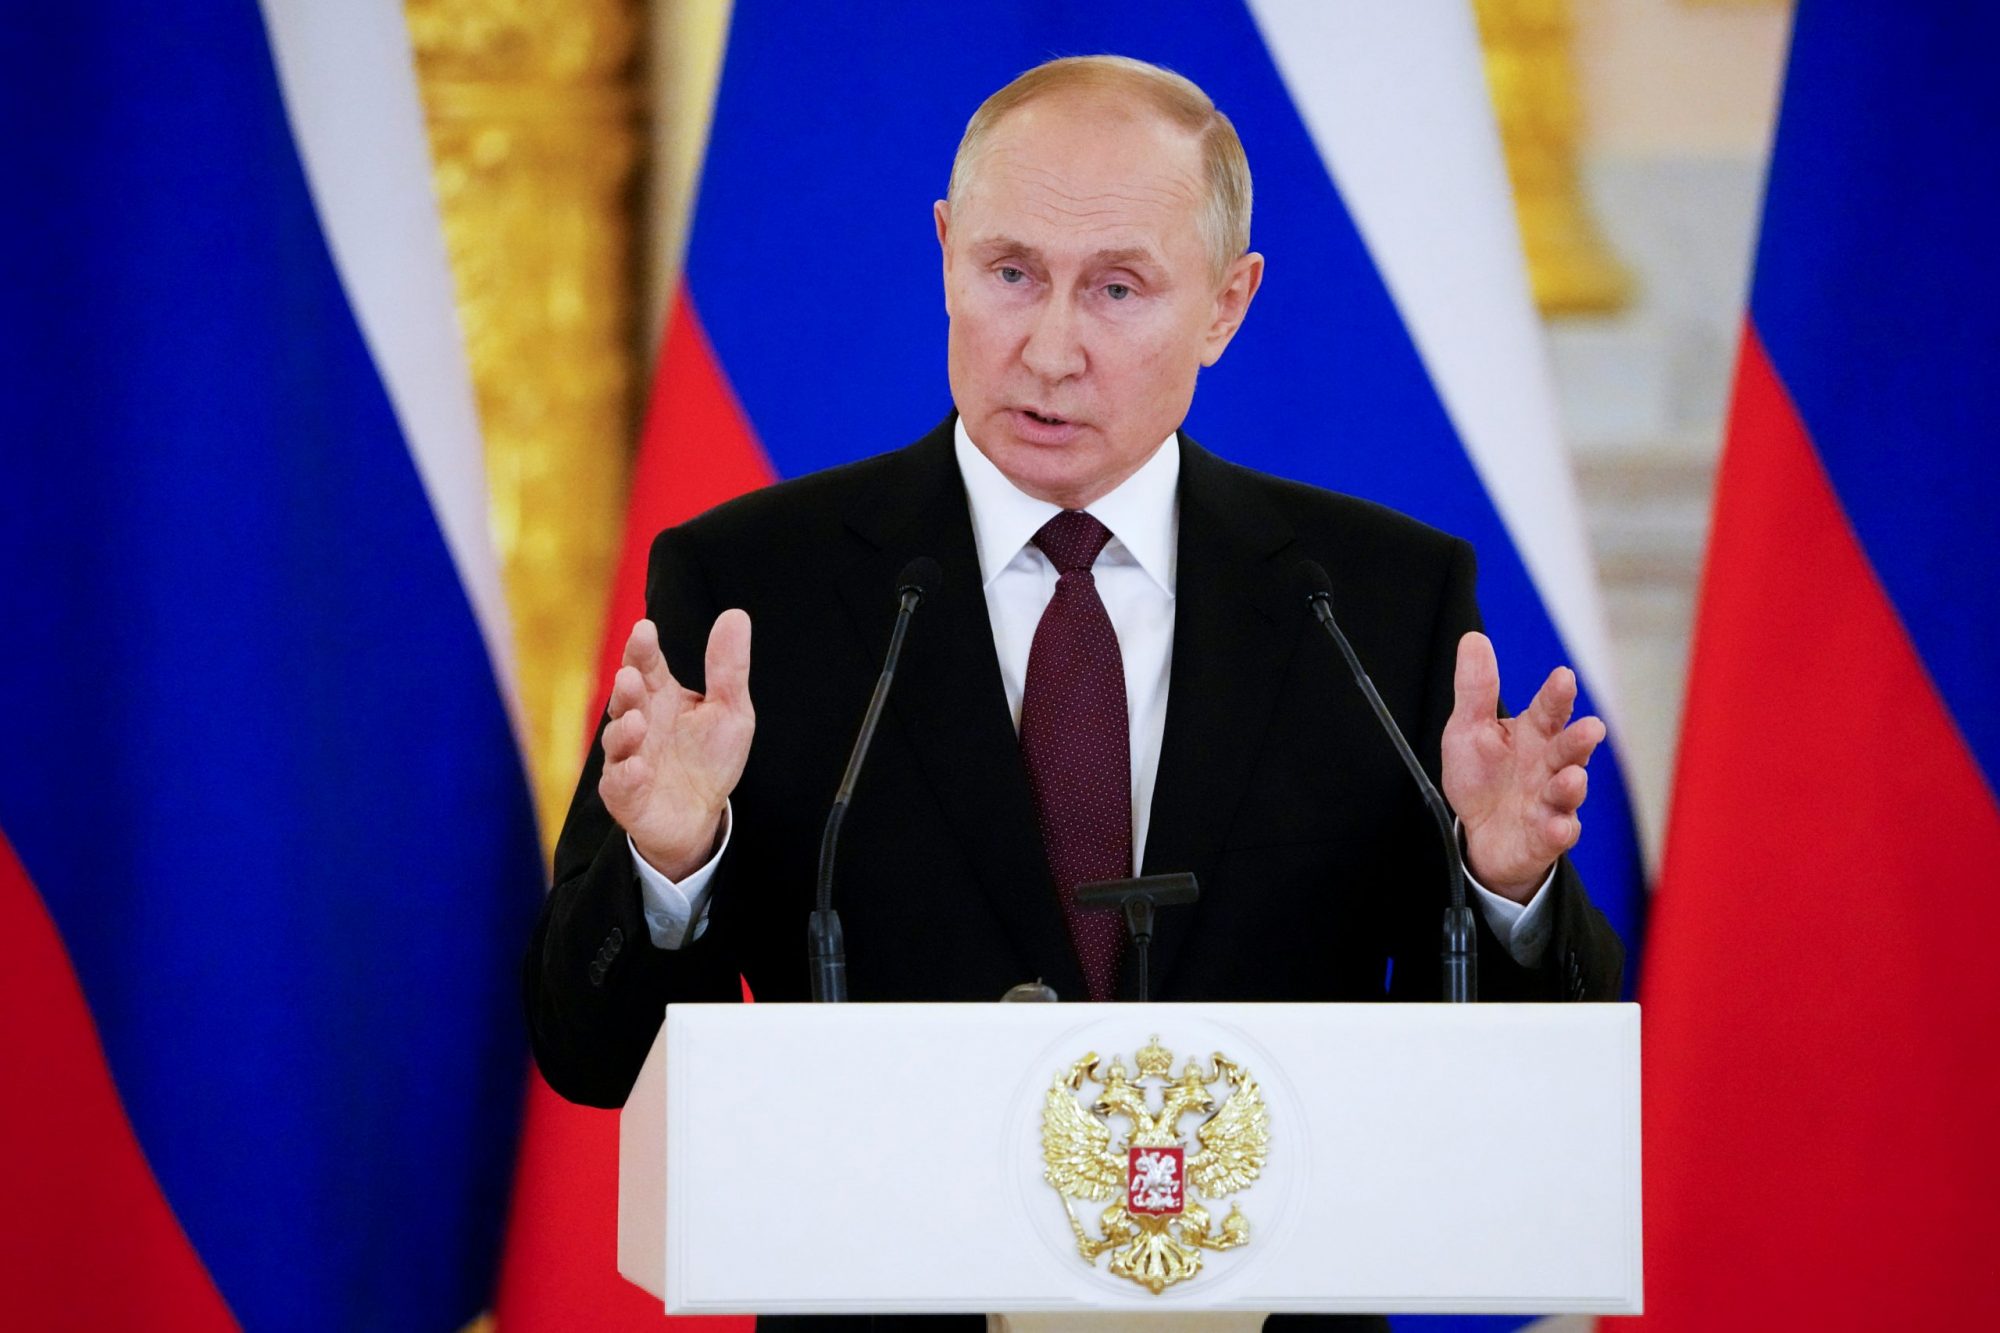 Putin's pipeline poses an “existential threat” to Ukraine